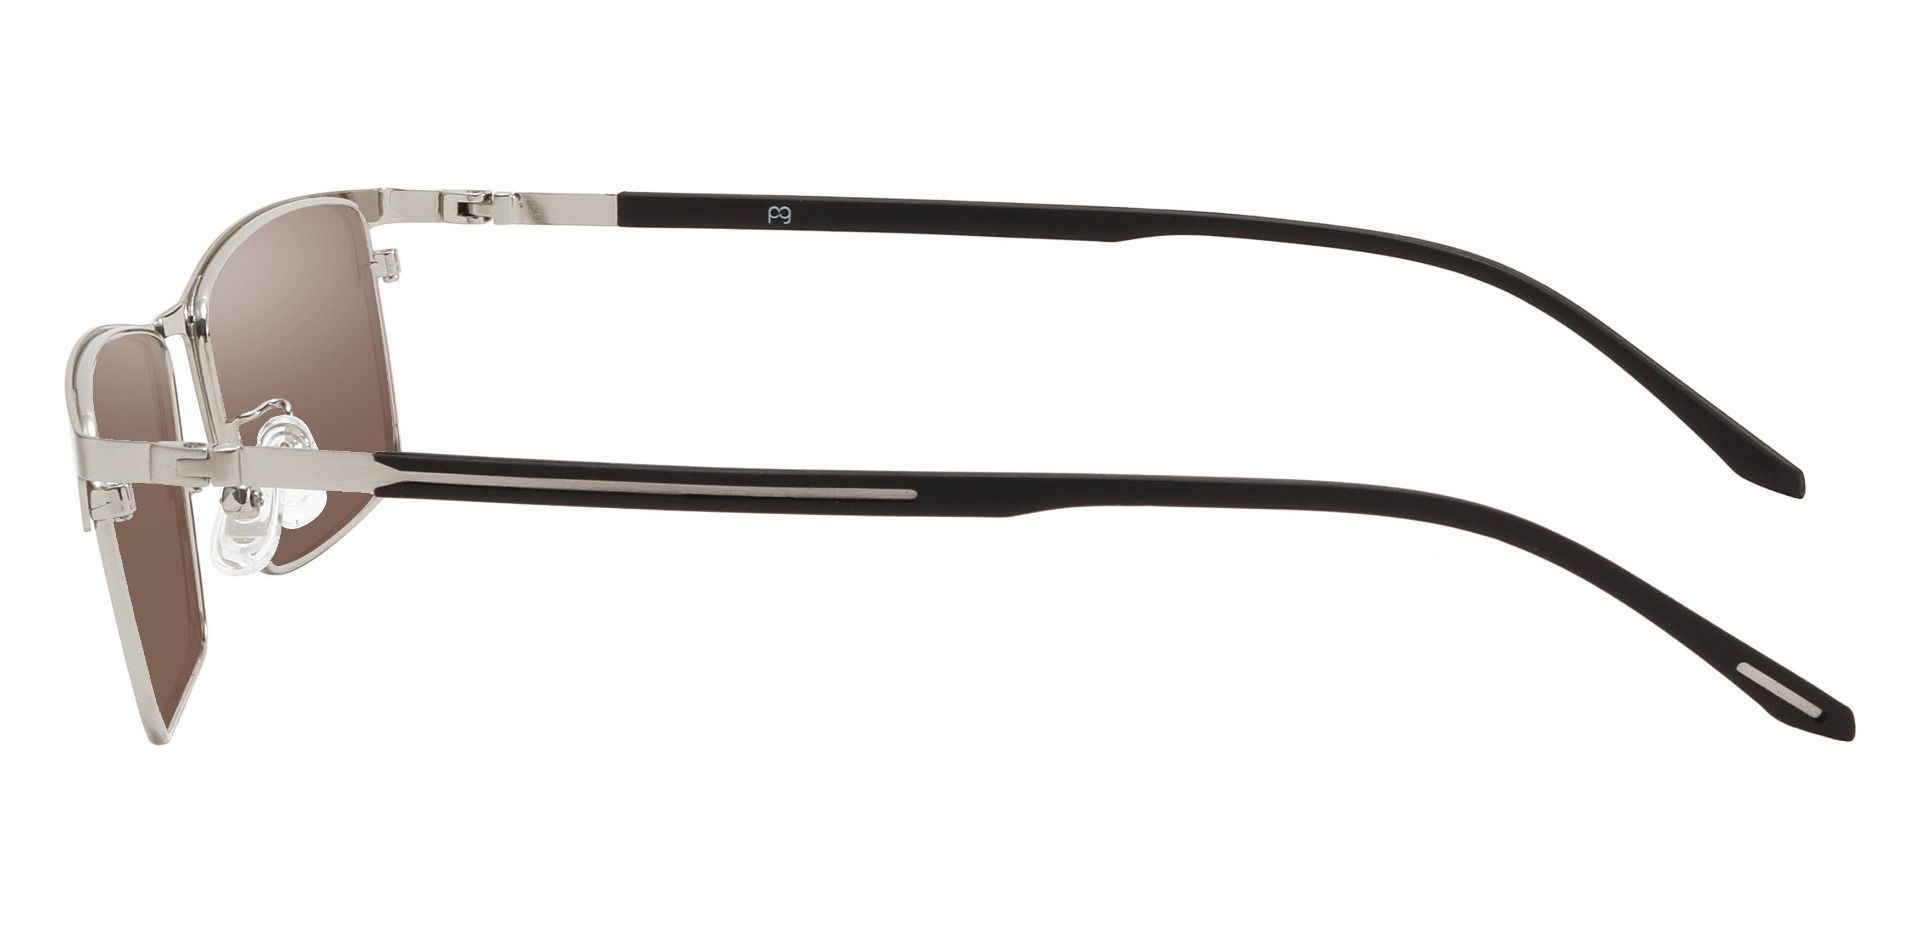 Regis Rectangle Prescription Sunglasses - Silver Frame With Brown Lenses